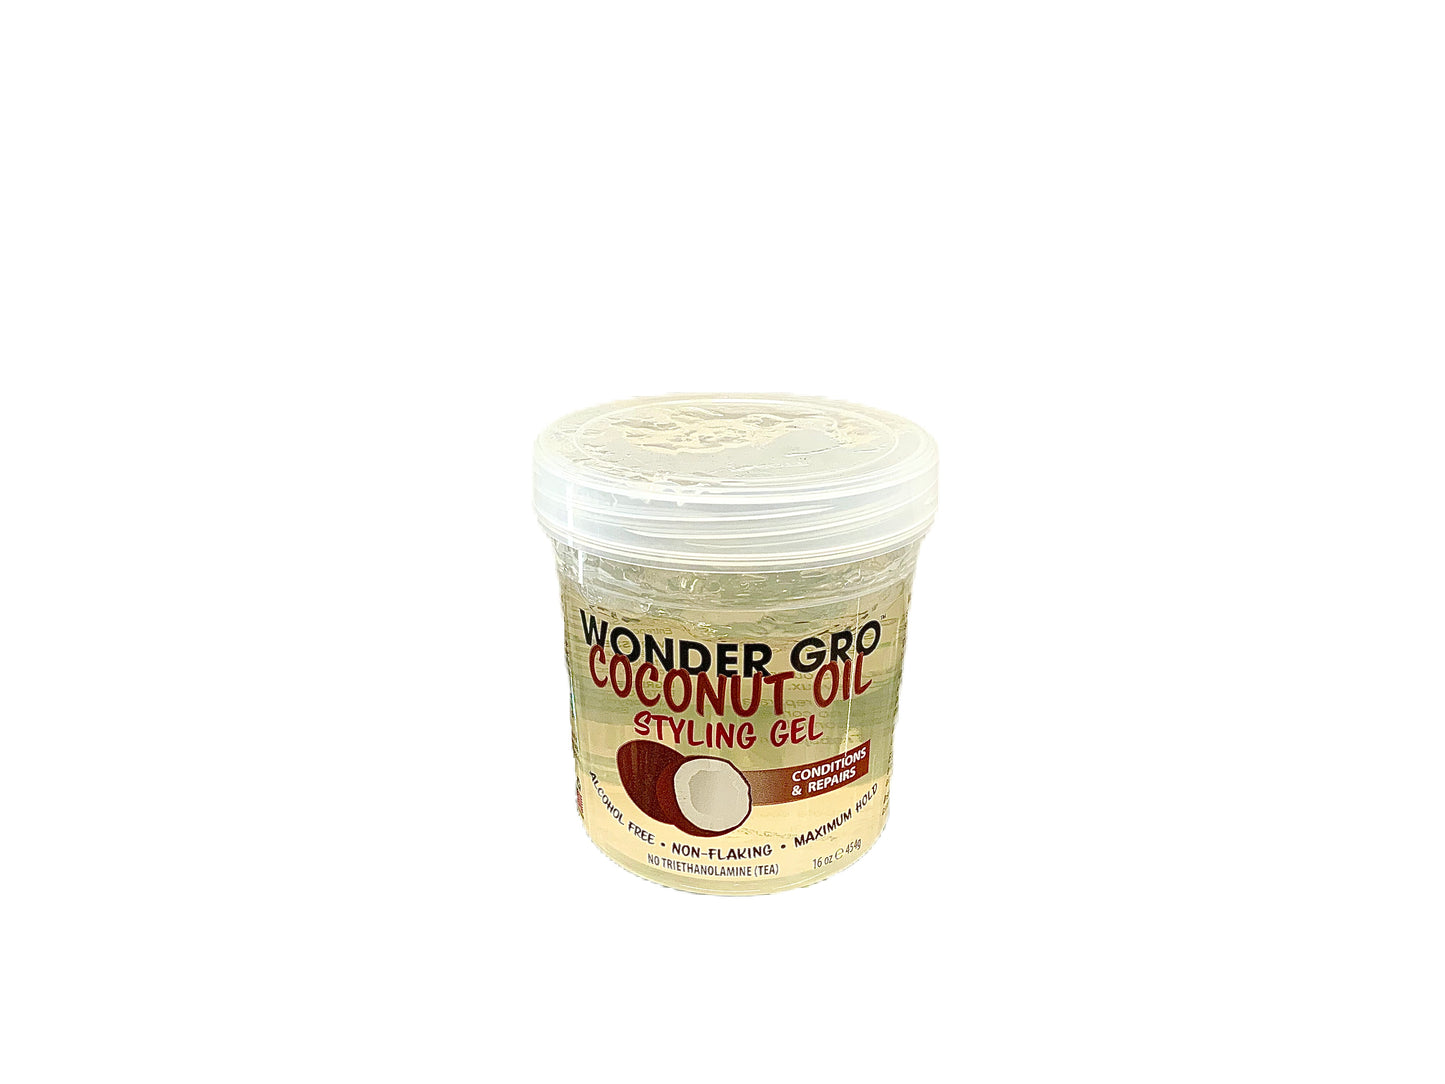 Wonder Gro Coconut Oil Styling Gel – JB African Enterprise